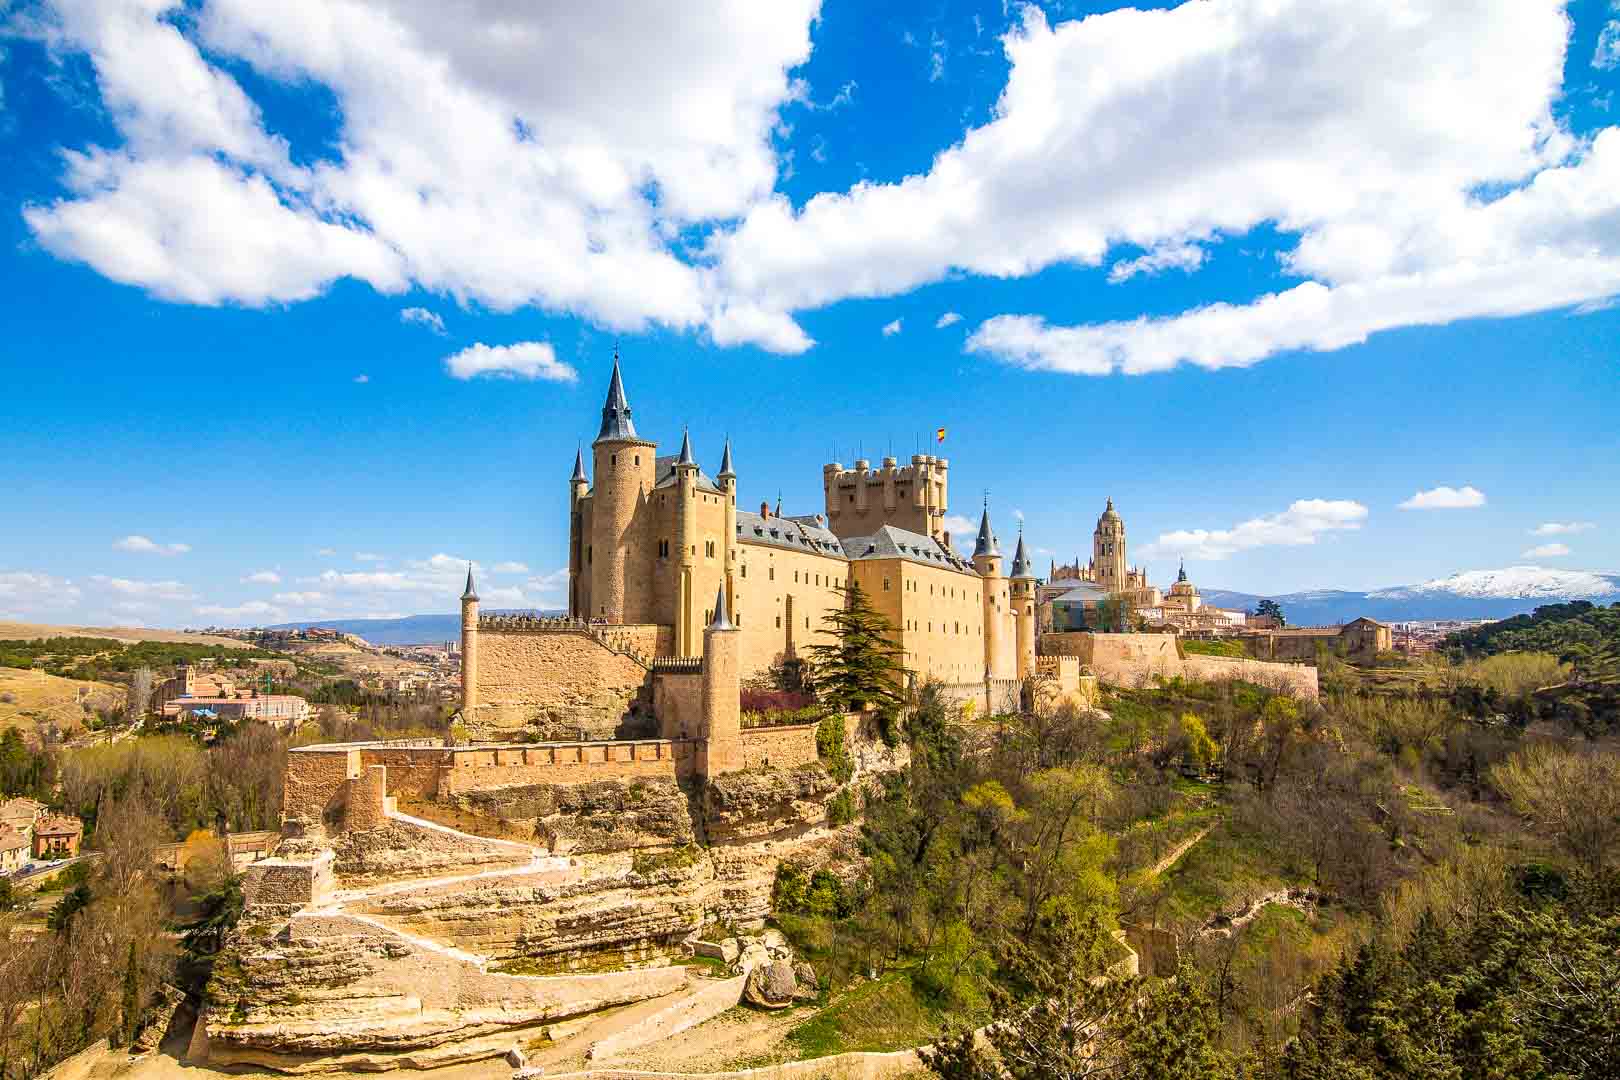 Alcazar de Segovia – The Walt Disney Castle in Segovia, Spain